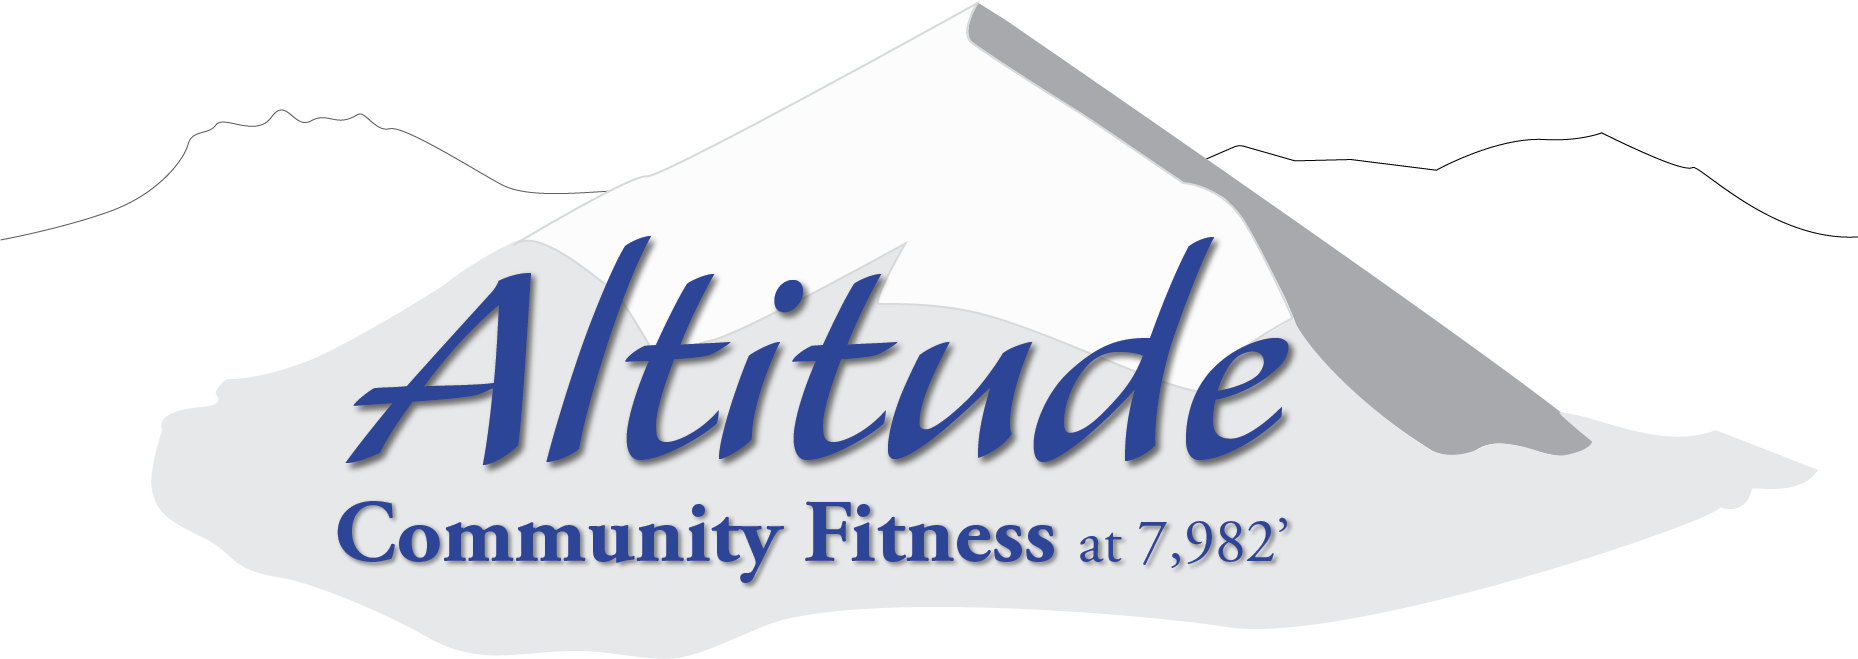 Altitude Community Fitness logo